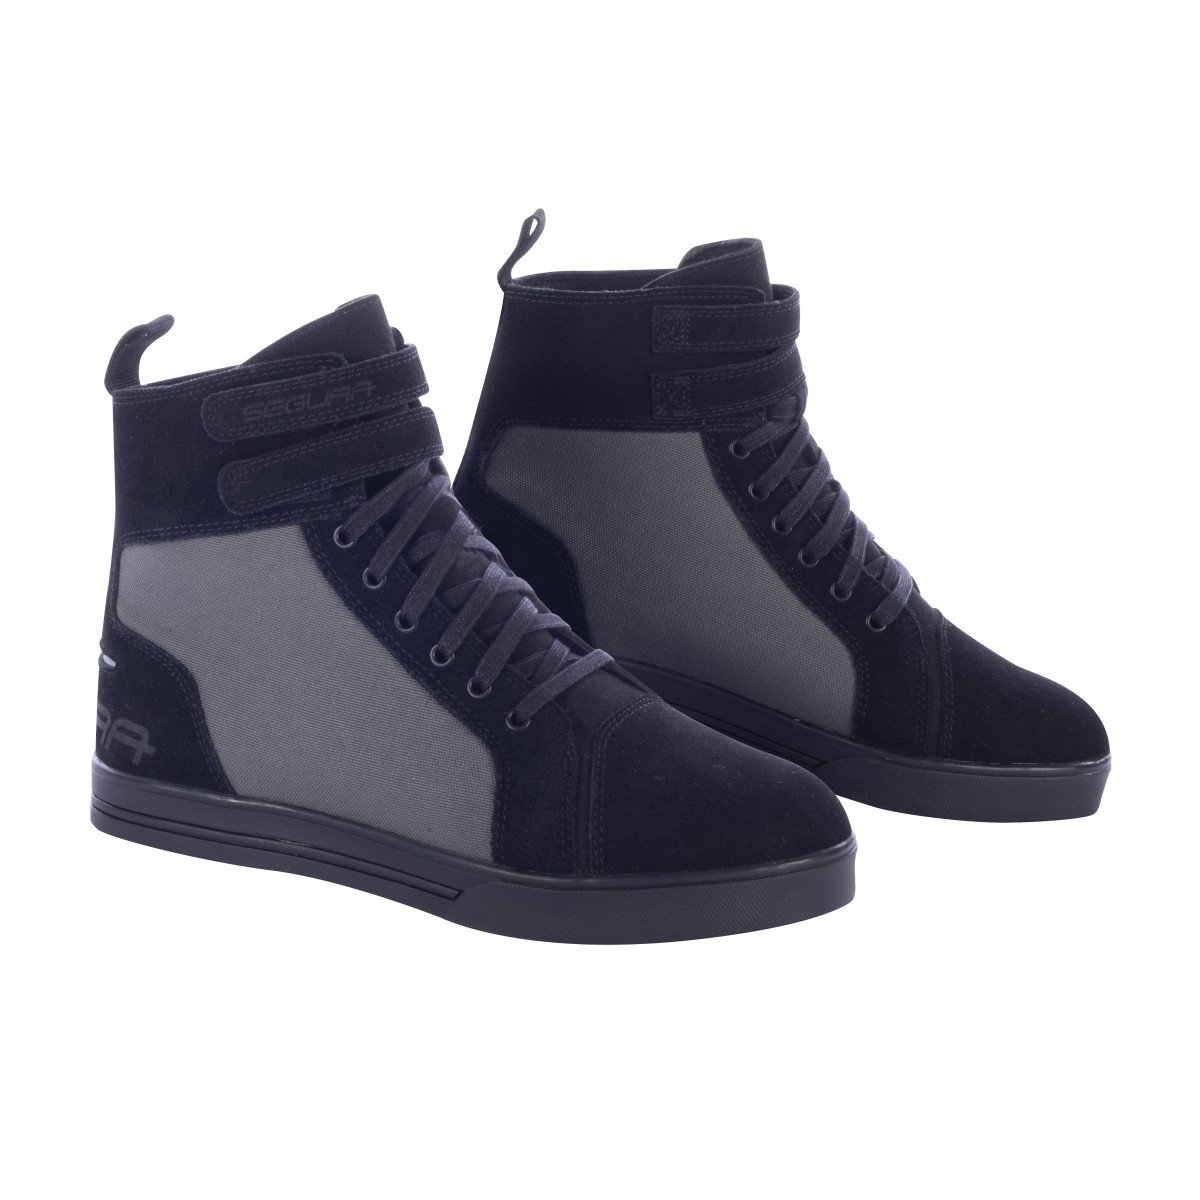 Image of Segura Sneakers Contact Black Grey Size 41 EN